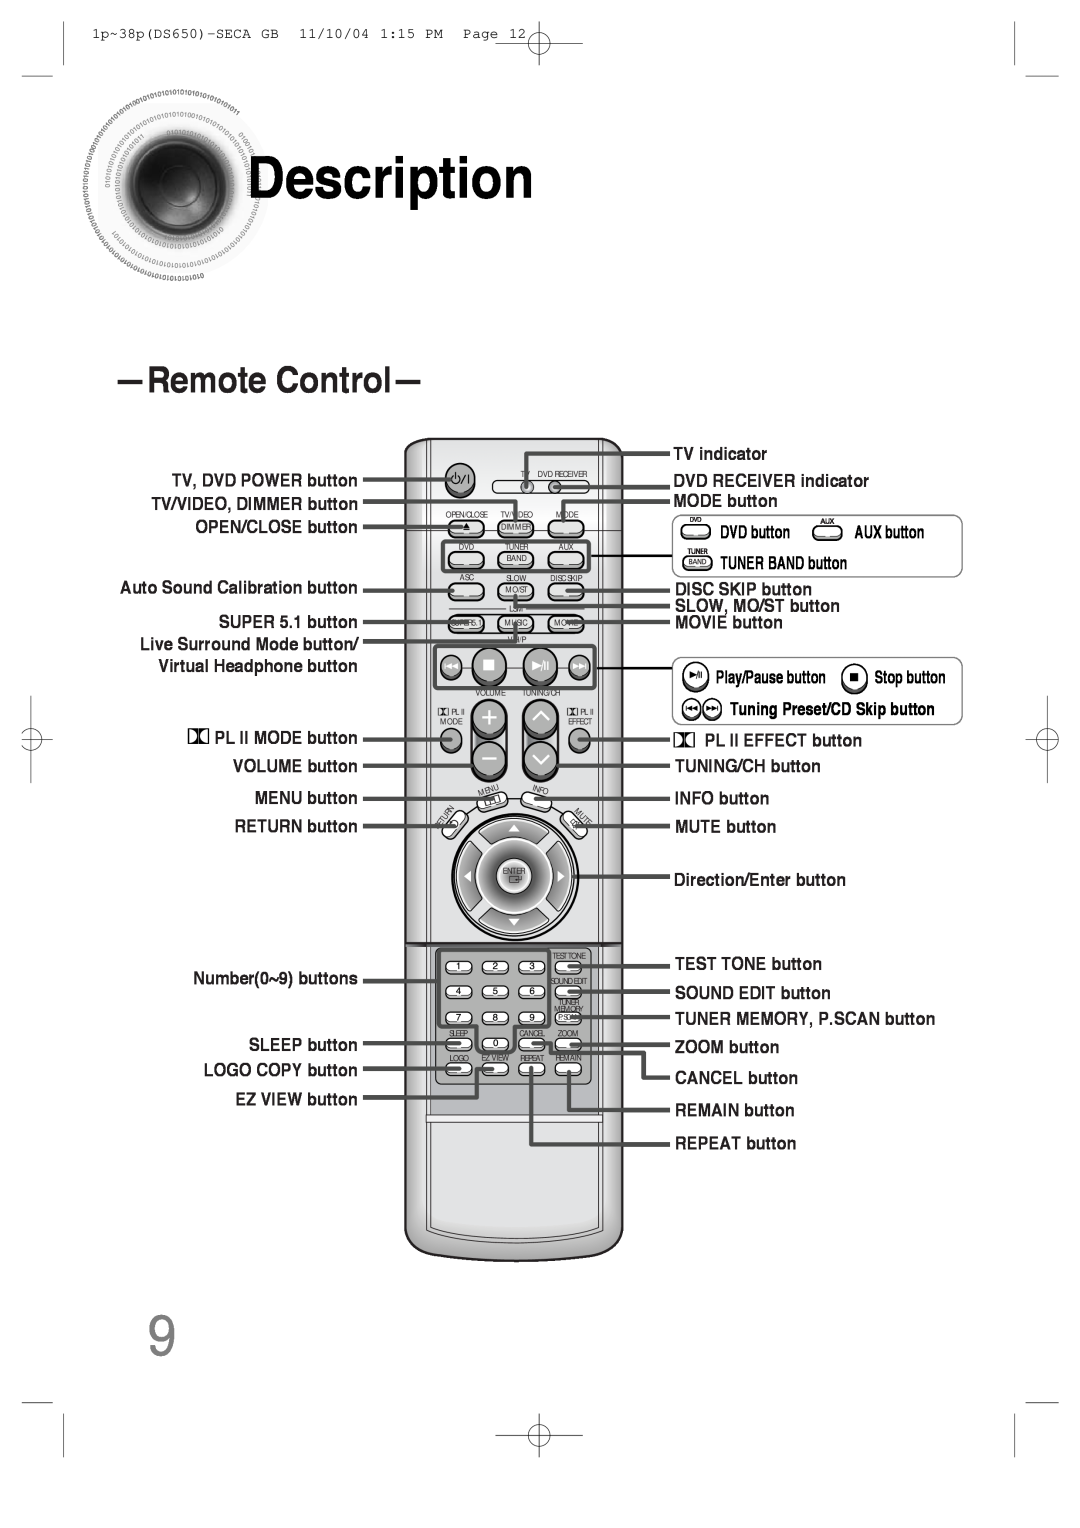 Samsung HT-DS650 instruction manual Description, RemoteControl, DVD button TUNER BAND button, Play/Pause button Stop button 